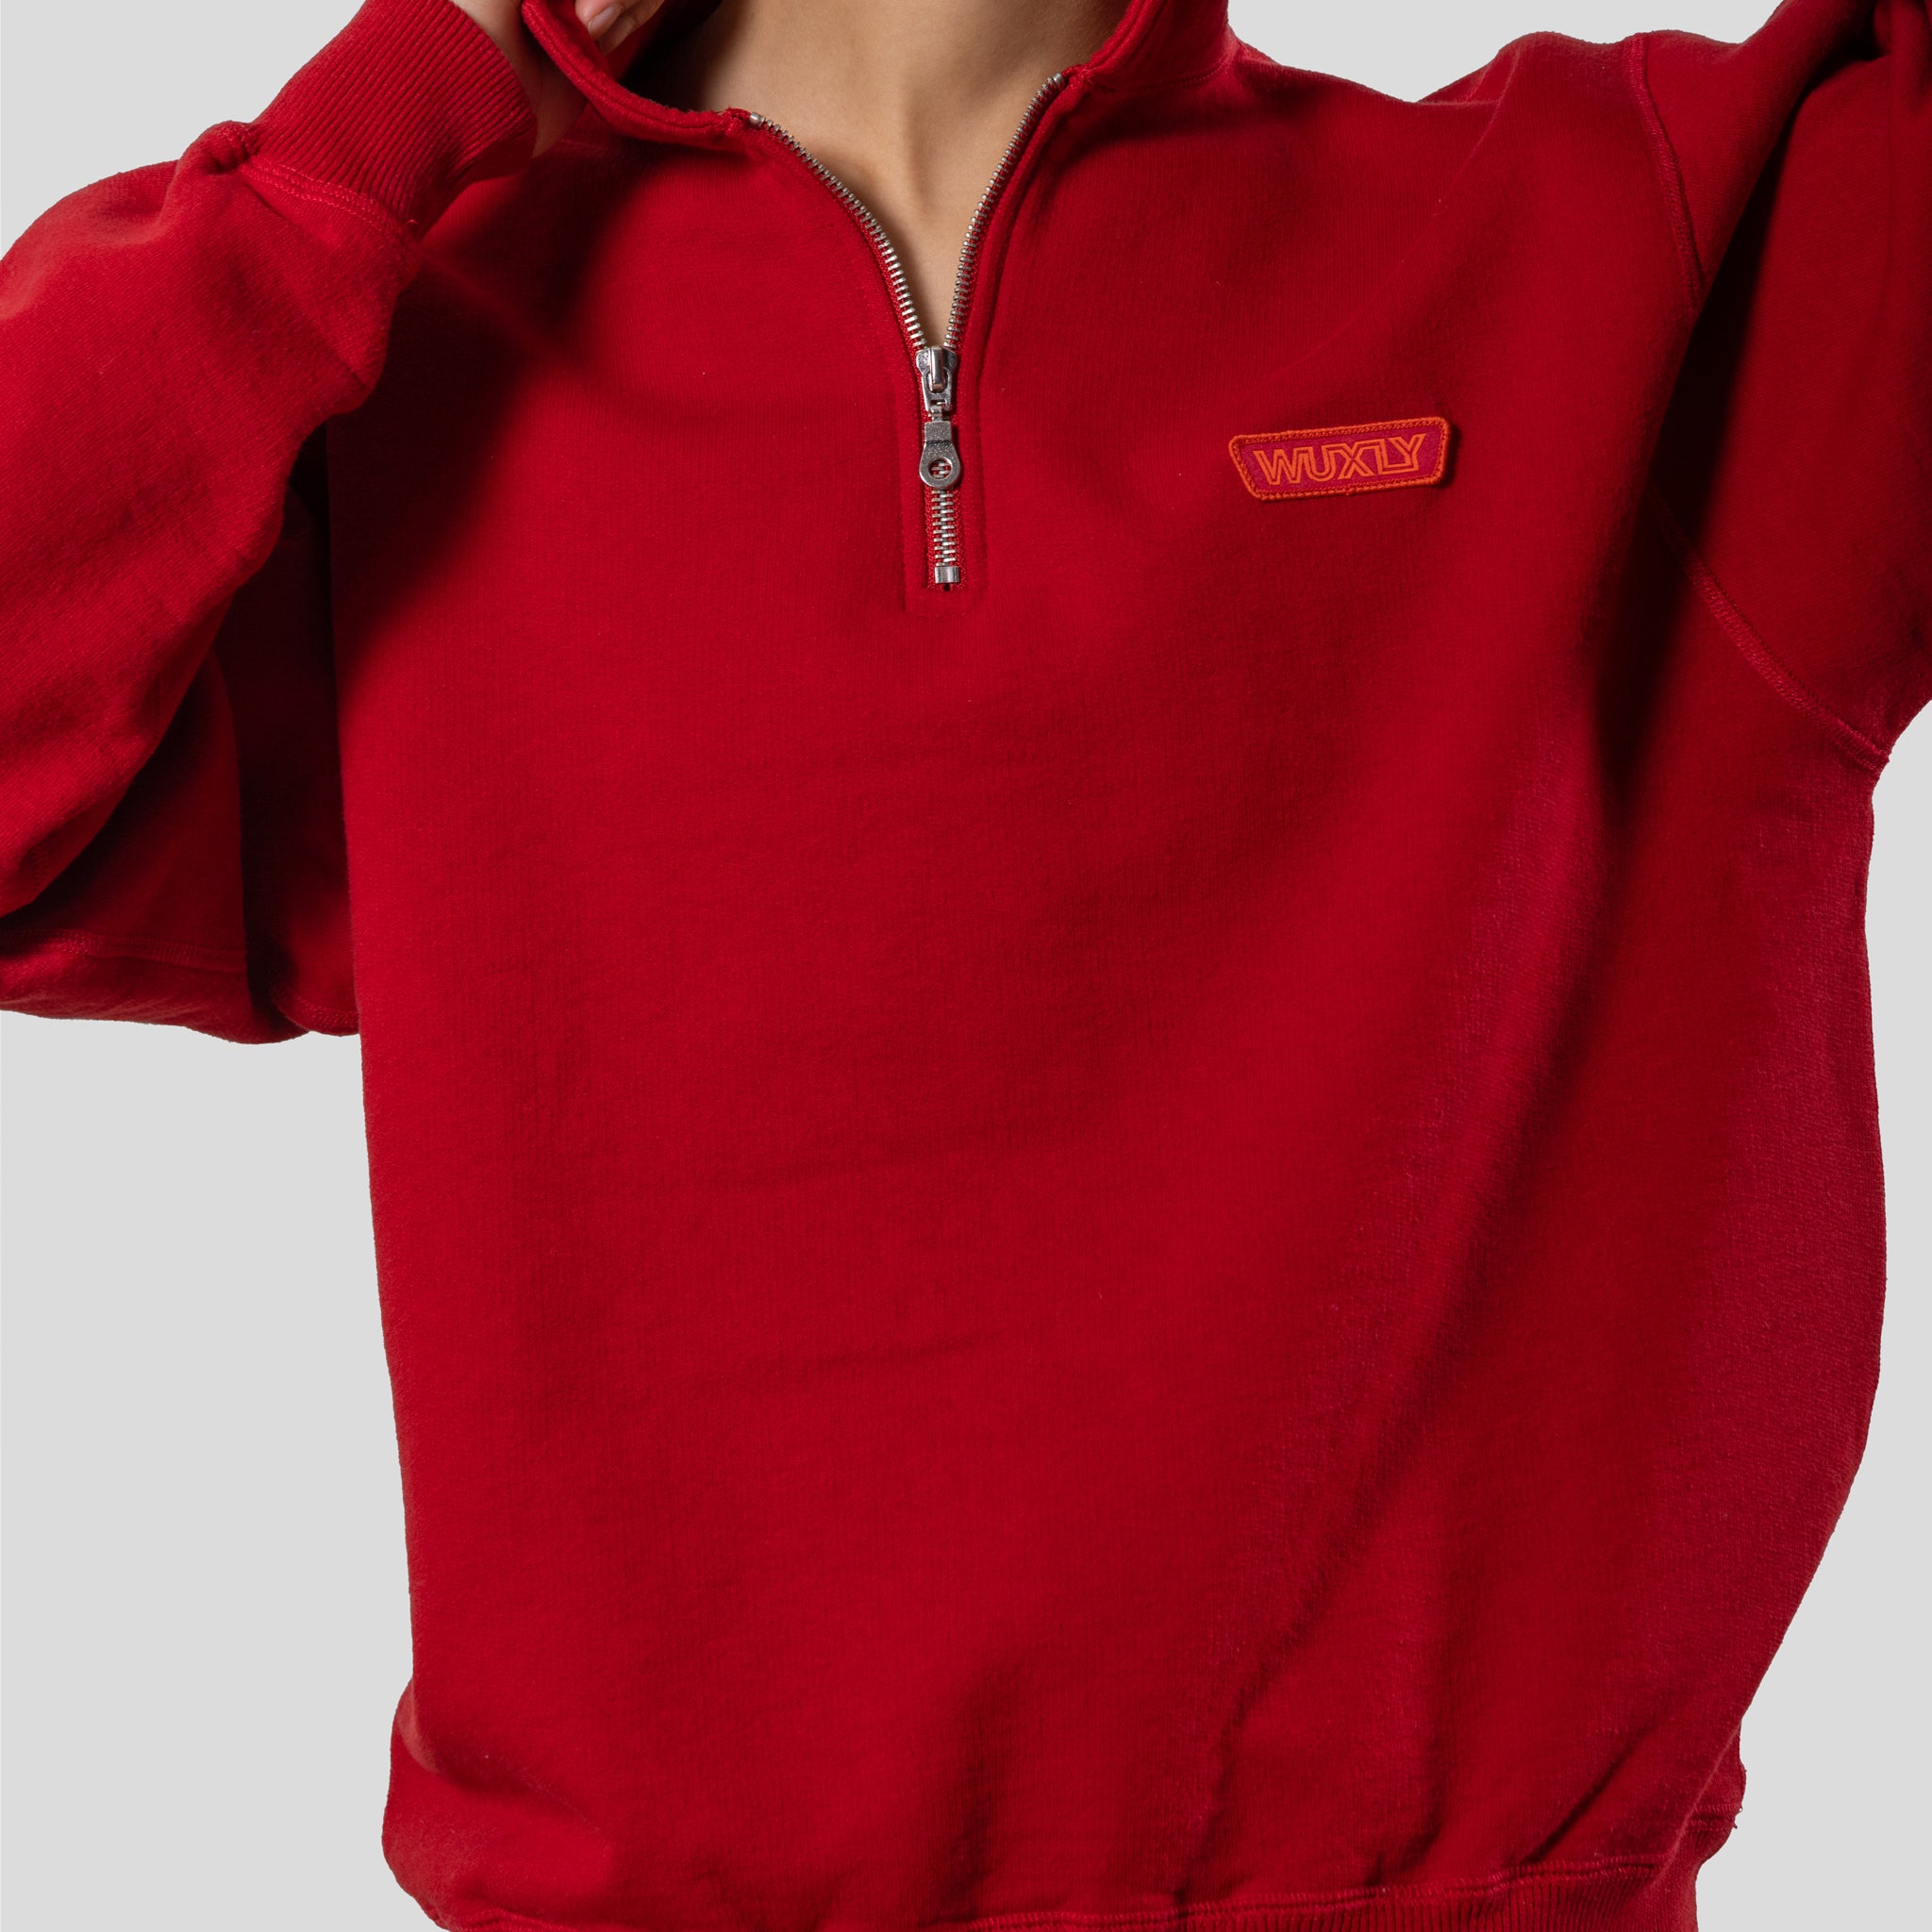 YWDJ Womens Sweatshirt Graphic Print with Crew Neck Long Sleeve Red XL 